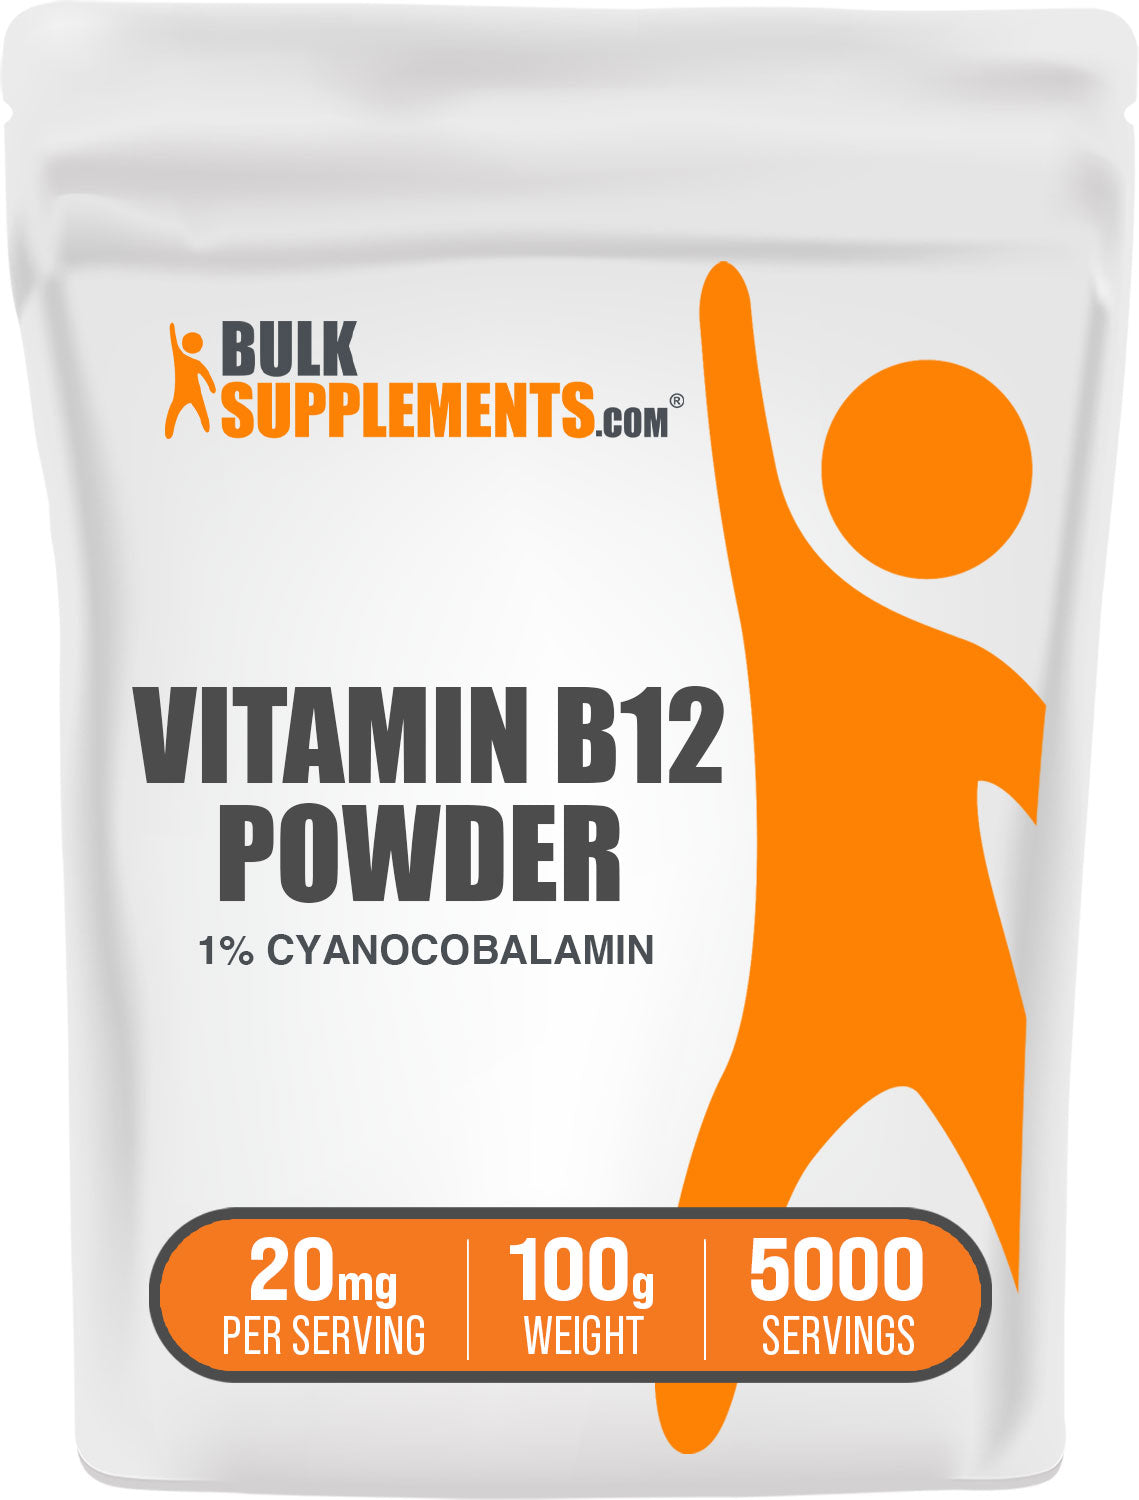 BulkSupplements Vitamin B12 Powder 1% Cyanocobalamin 100g bag